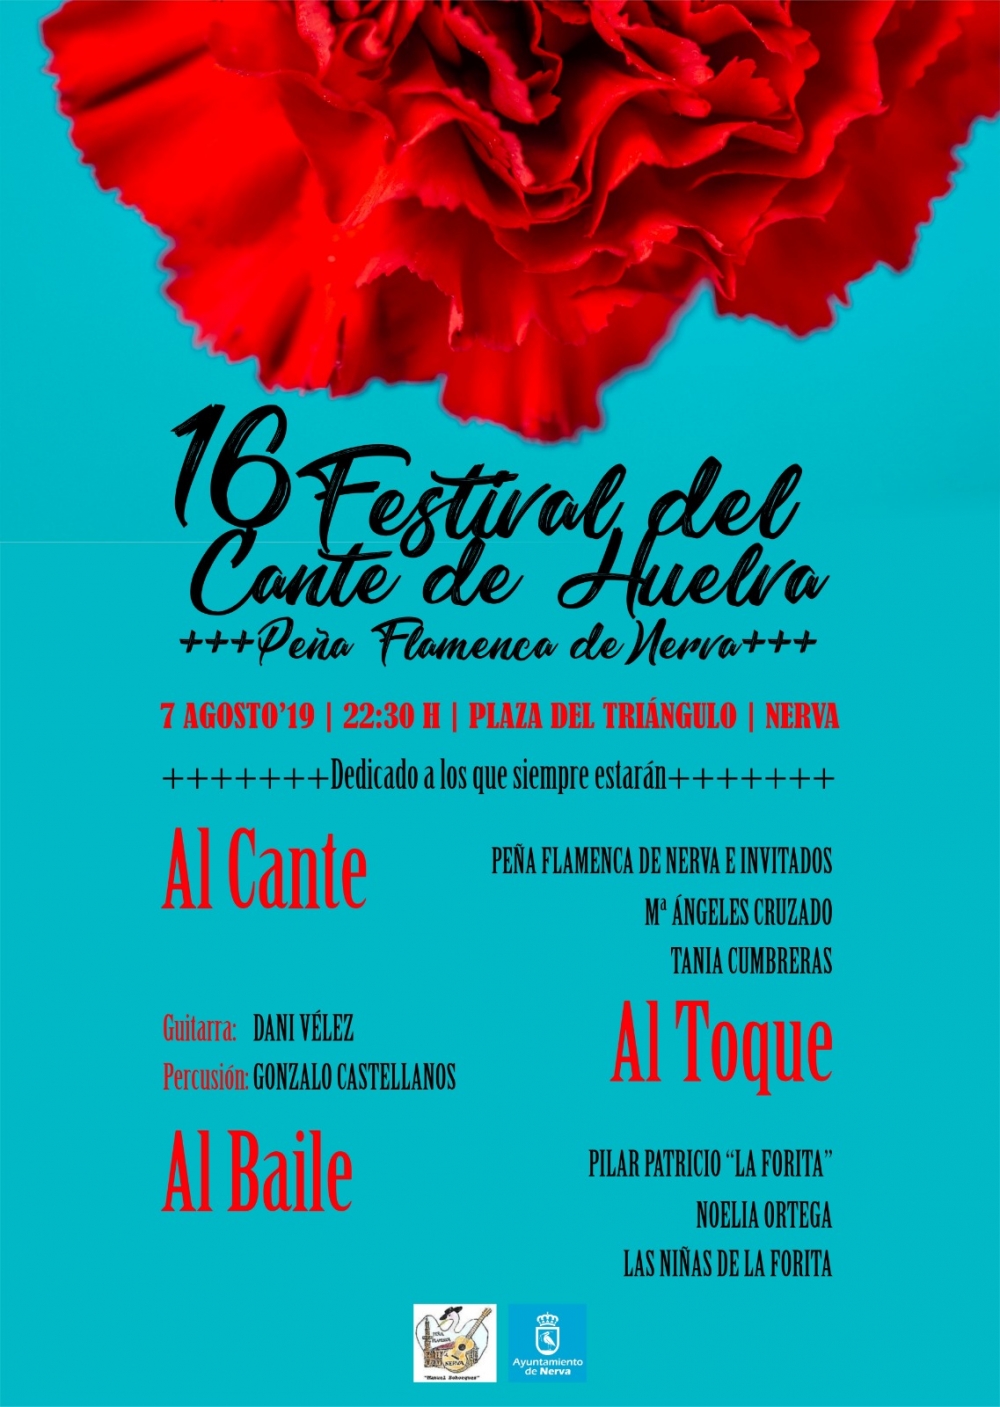 16 Festival de Cantes de Huelva